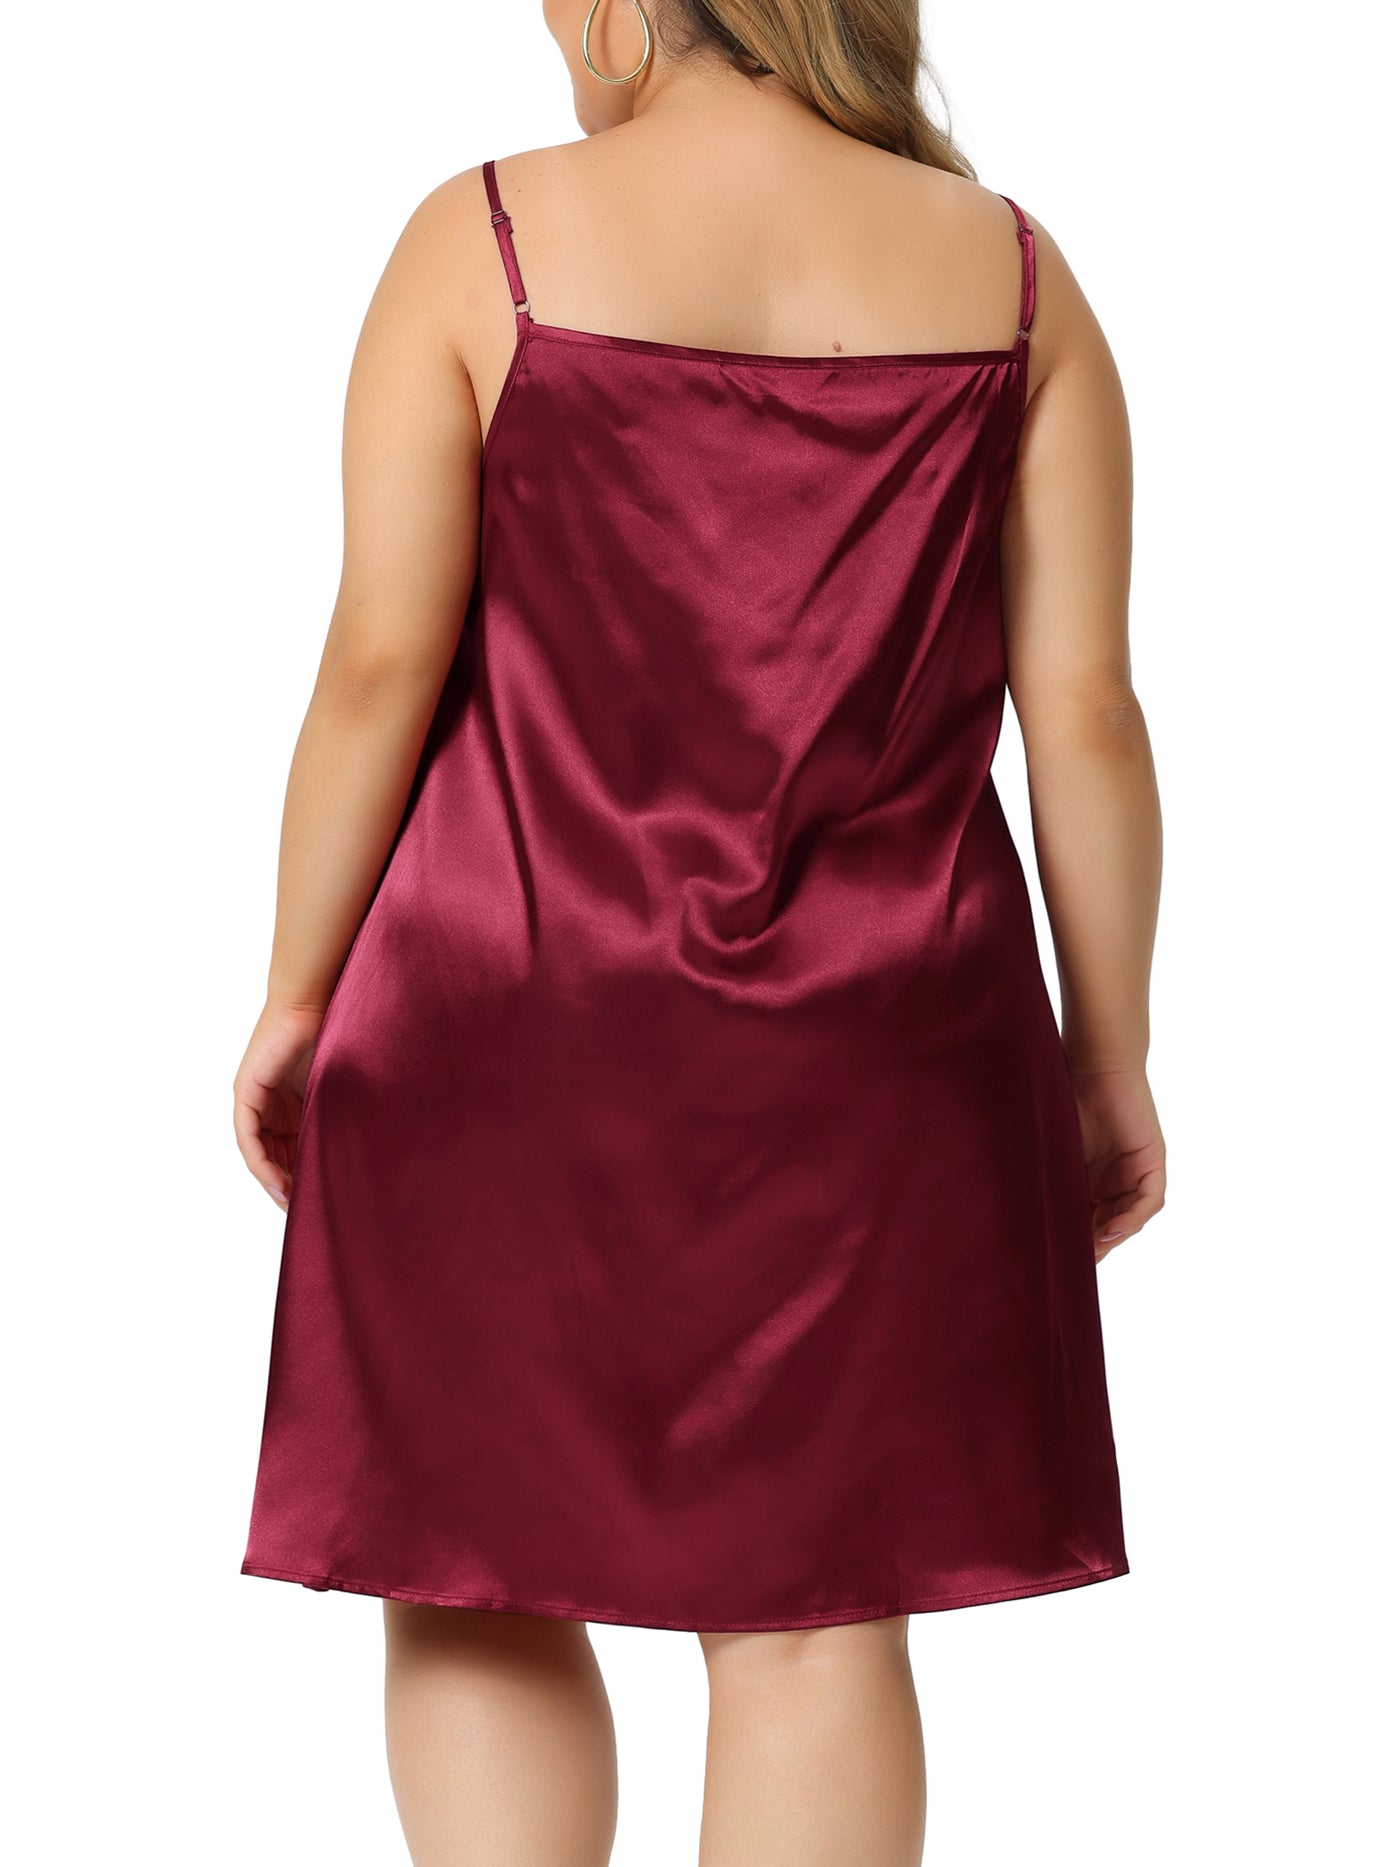 Bublédon Plus Size Nightgown for Women Lace Nightgowns Spaghetti Lounge Sleep Dress